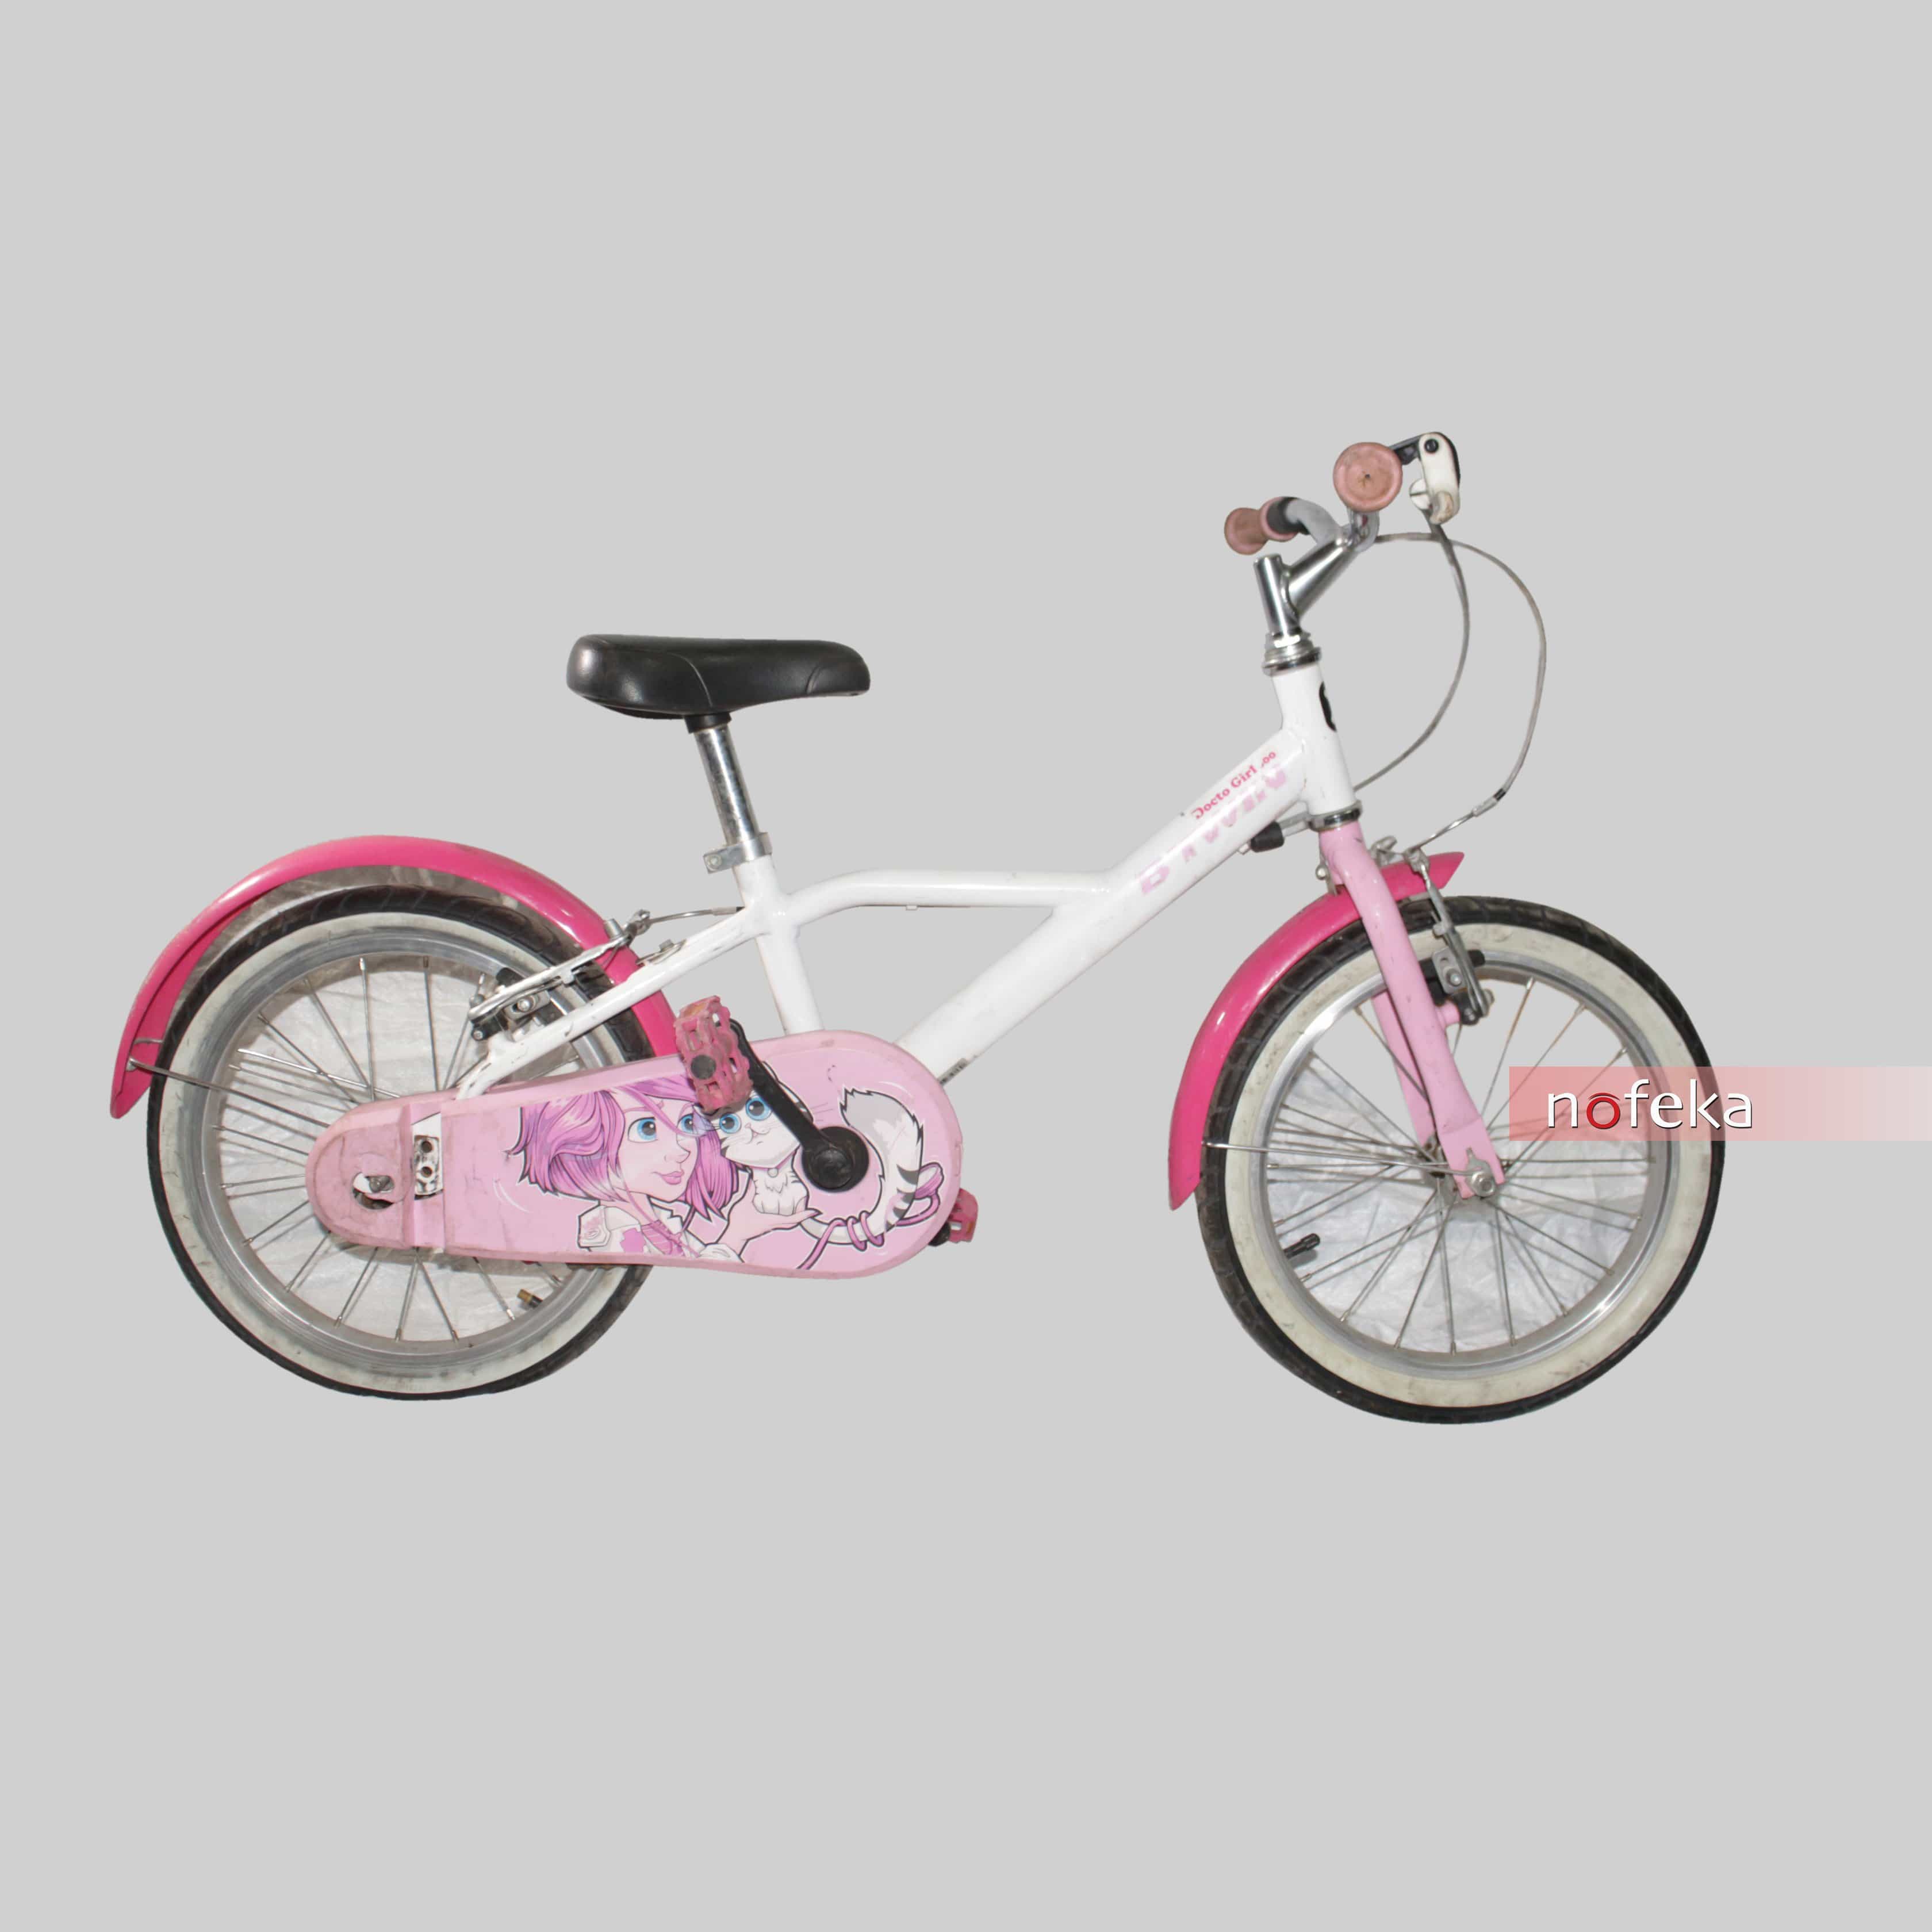 12 inch bike for girl